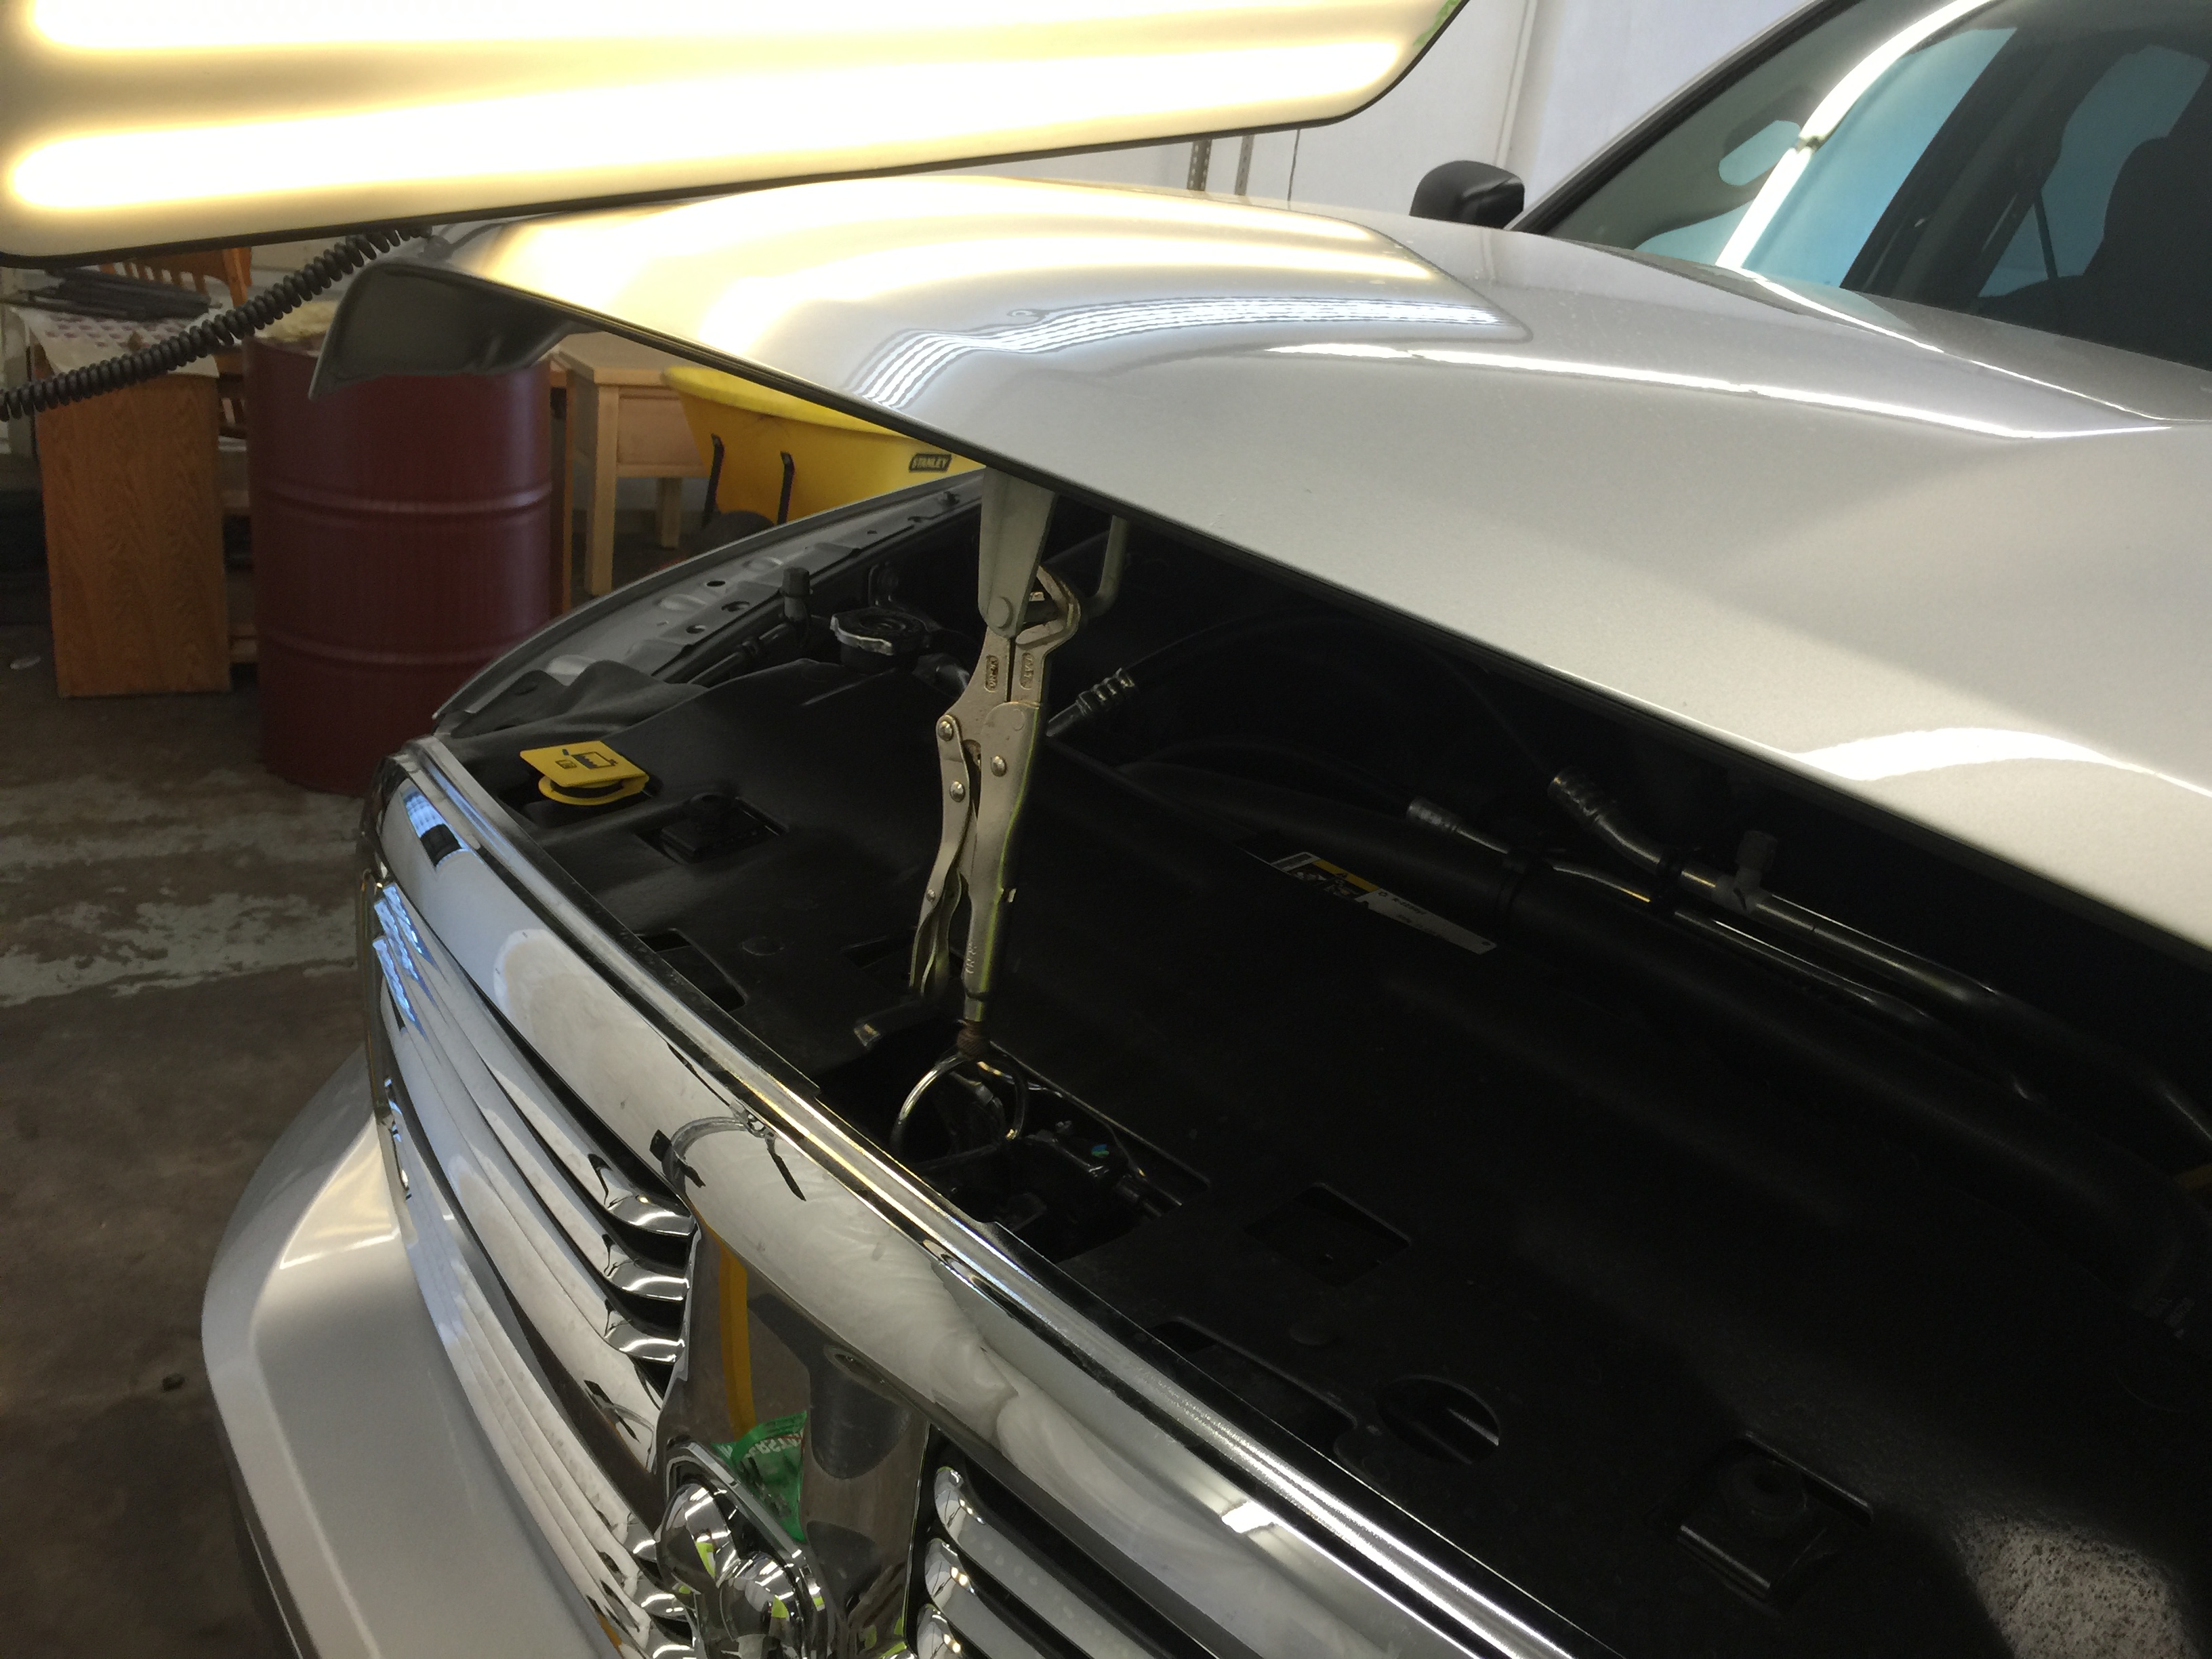 2015 Dodge Ram hail damage on hood, paintless dent repair, Springfield, IL. https://217dent.com by Michael Bocek